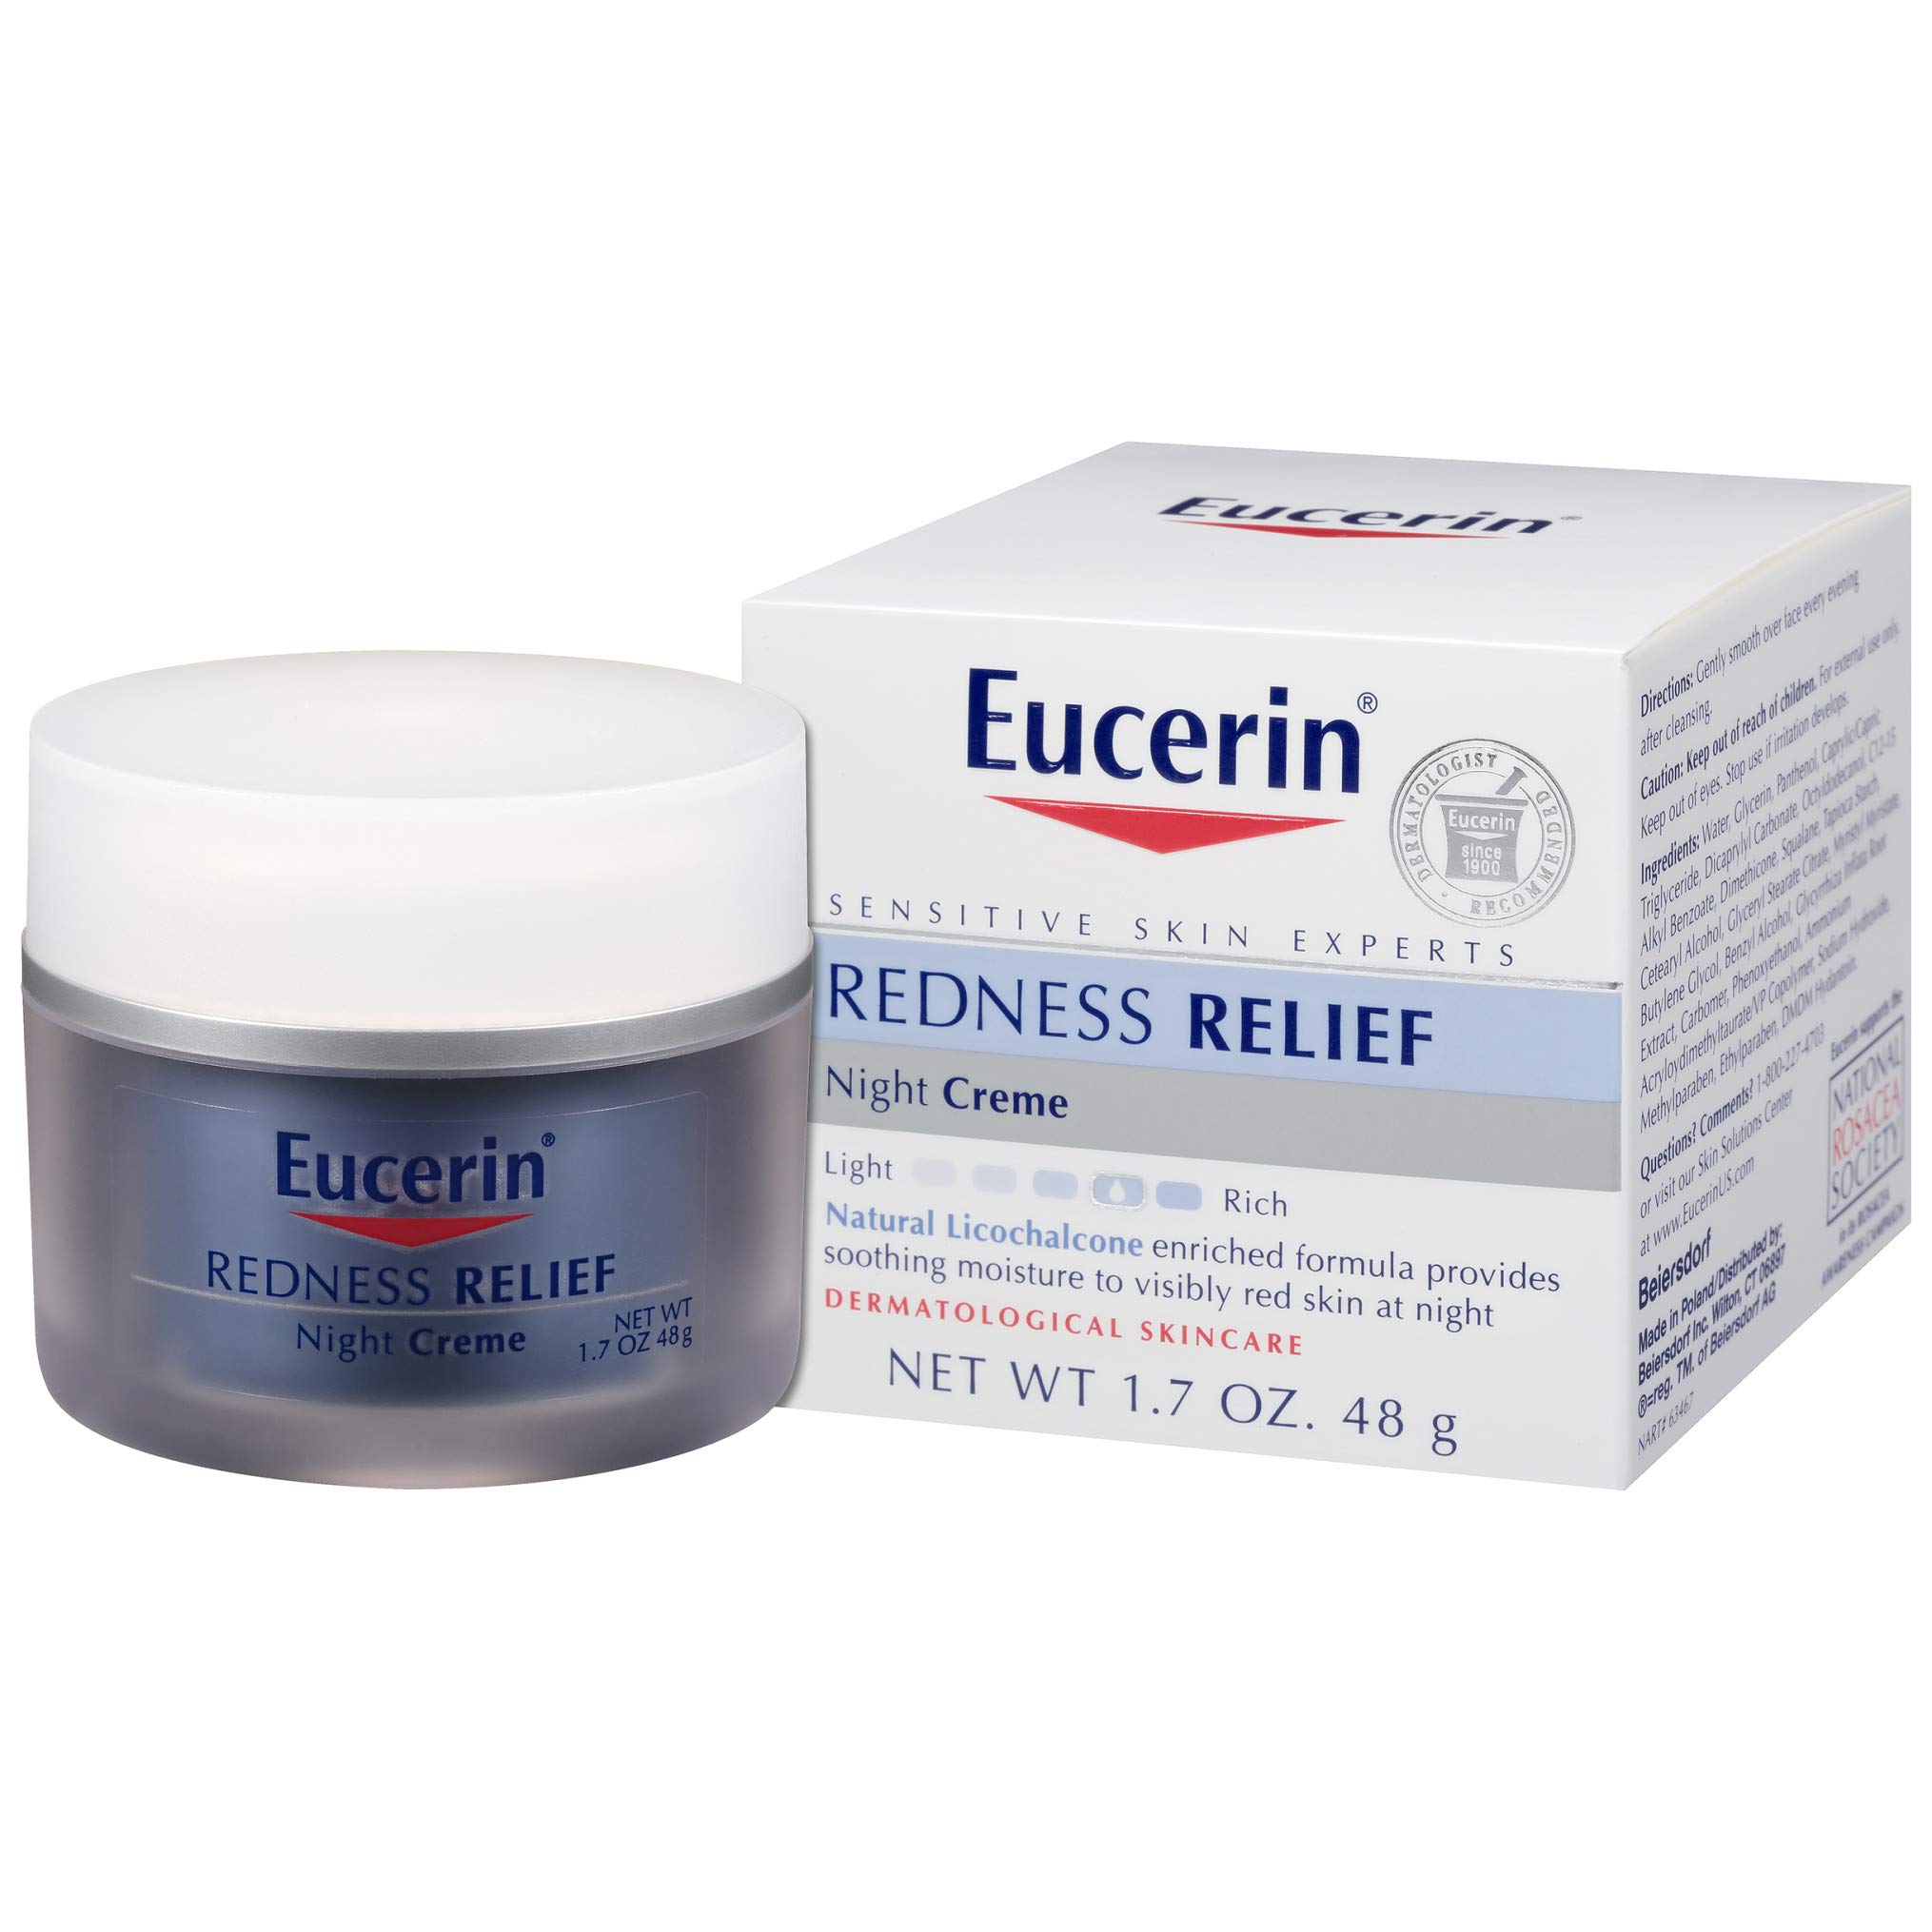 Eucerin Redness Relief Night creme - gently Hydrates To Reduce Redness-Prone Skin At Night - 17 oz Jar